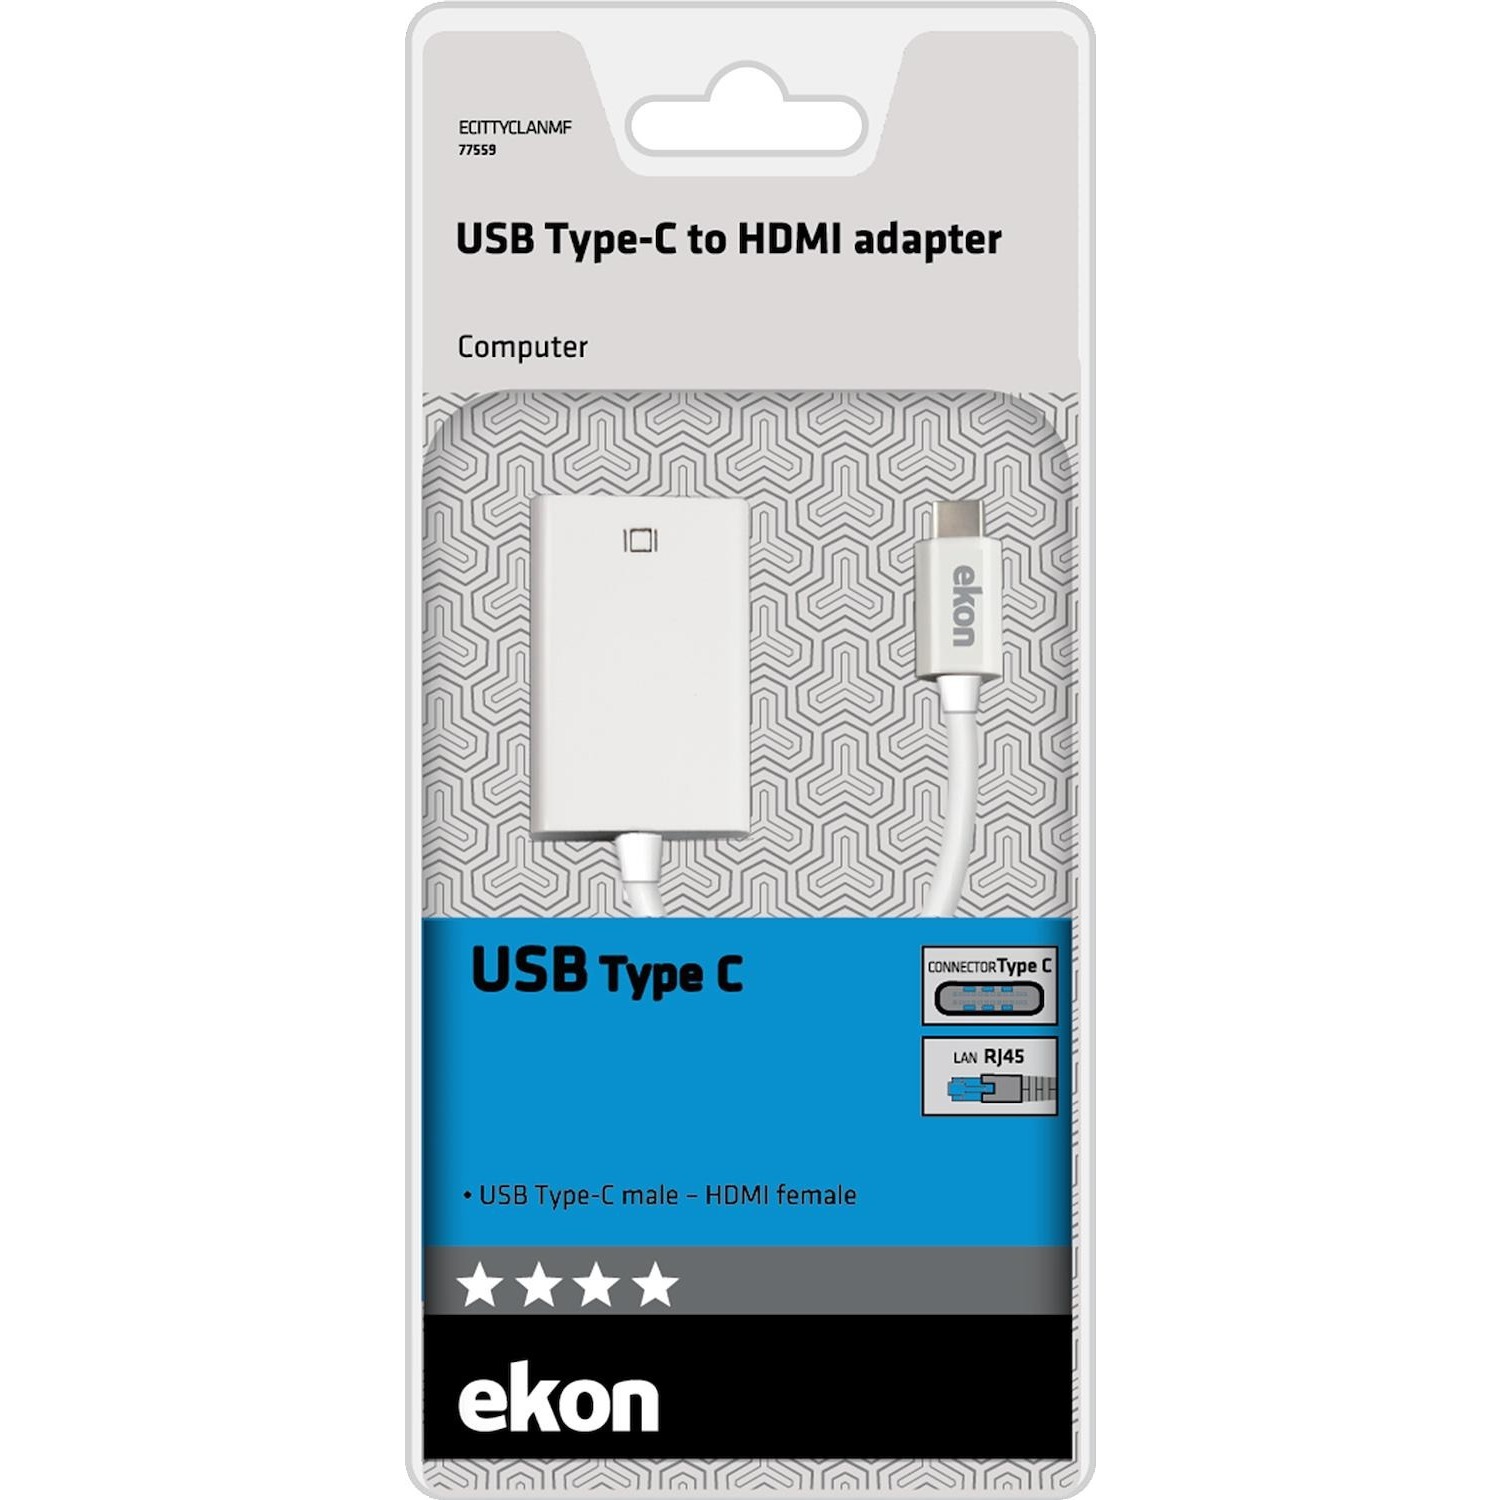 Immagine per Adattatore USB Ekon Type-C - LAN MF da DIMOStore